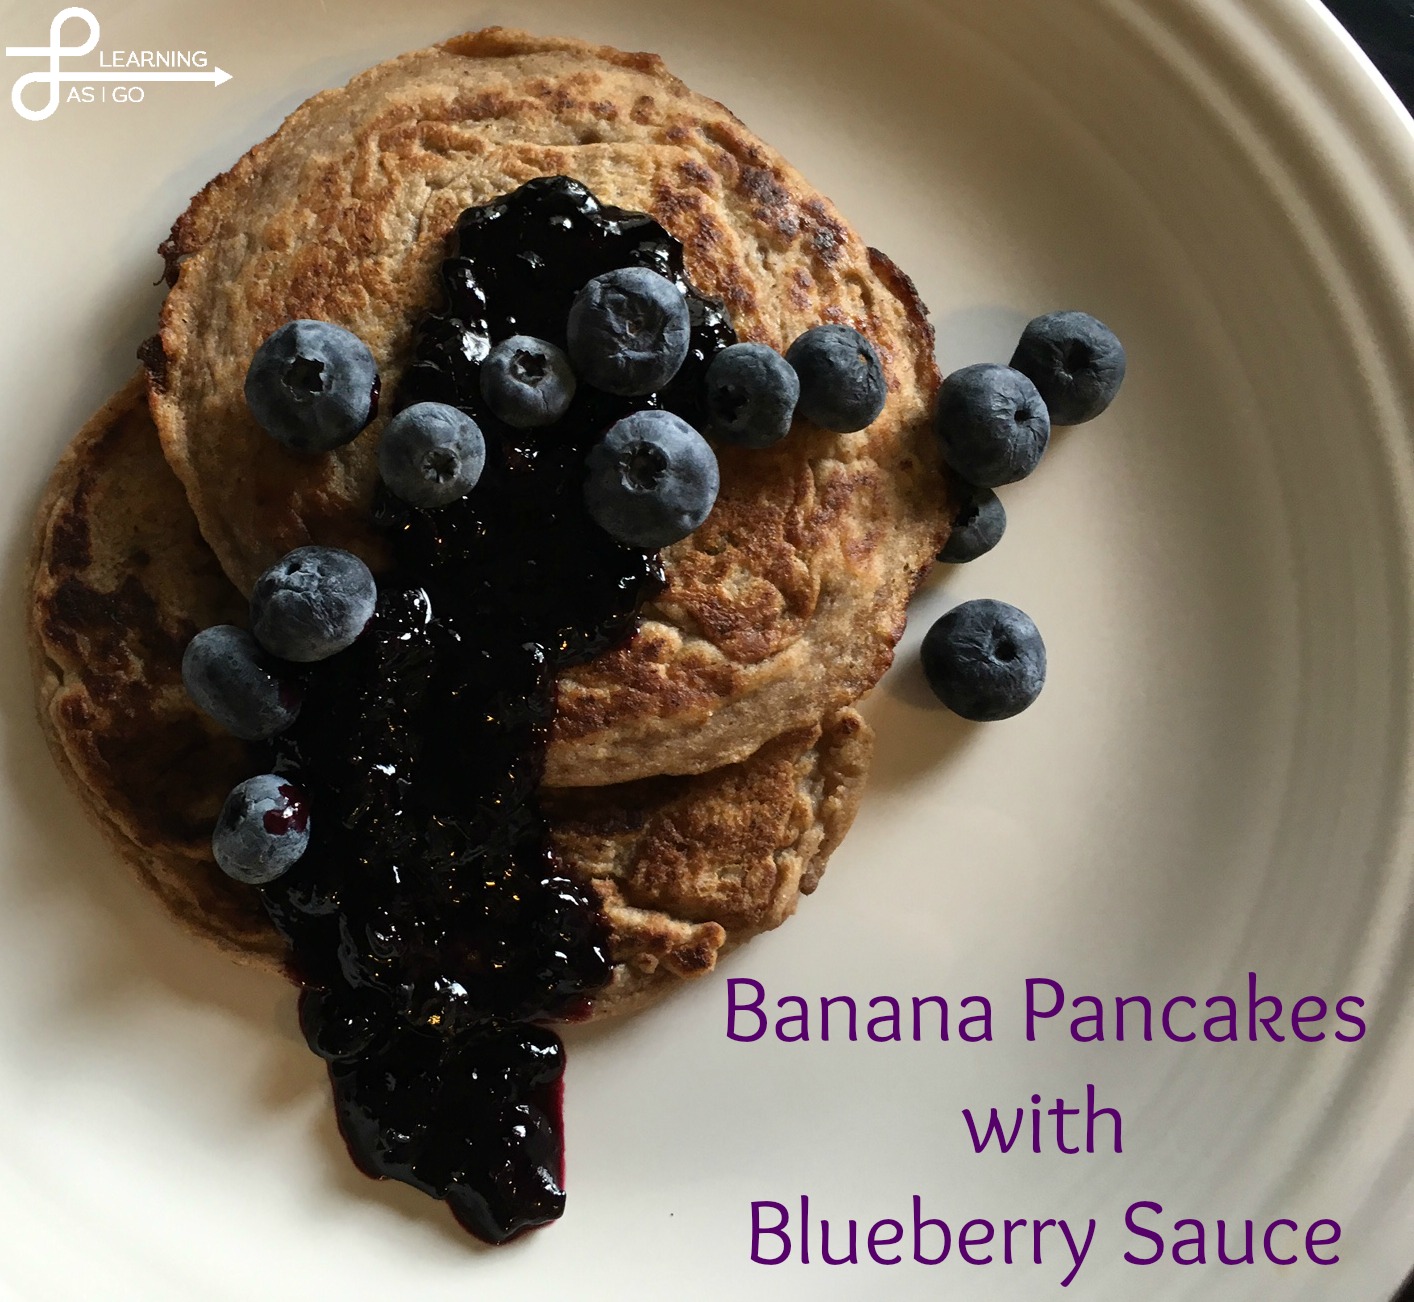 Banana Pancakes with Blueberry Sauce